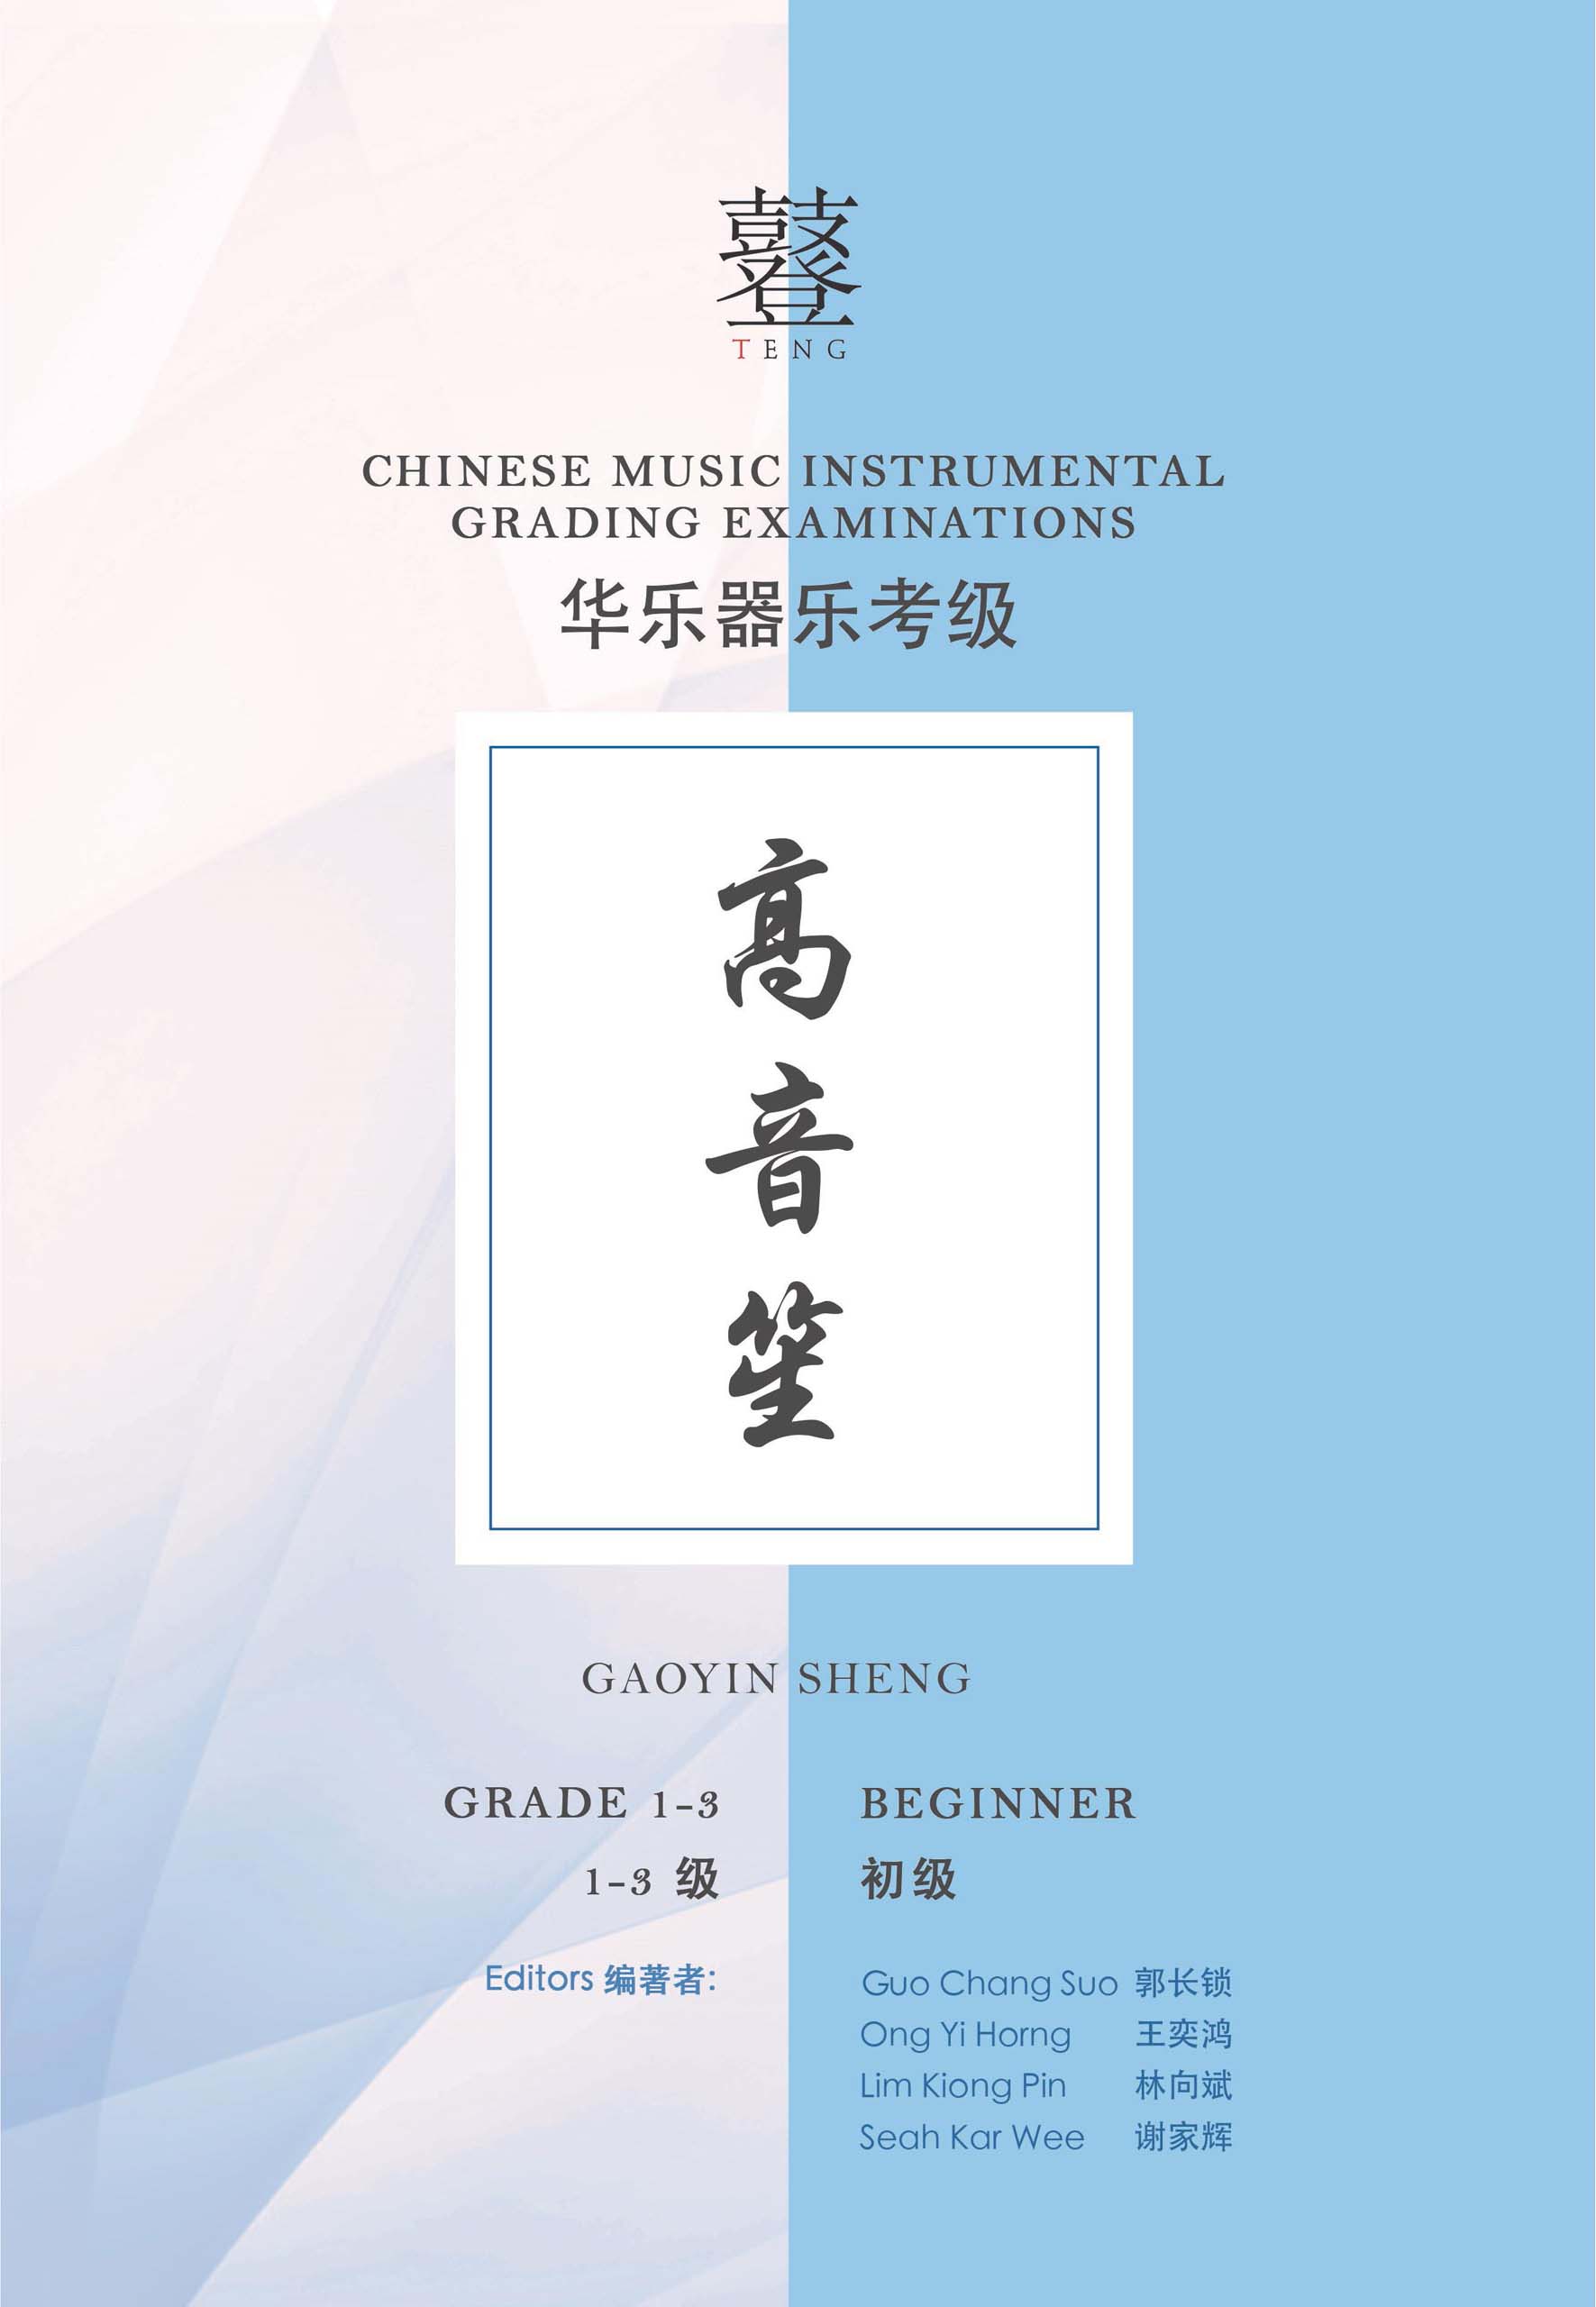 Gaoying Sheng Grading Examination Book by Teng Beginner Grade 1-3 featured photo